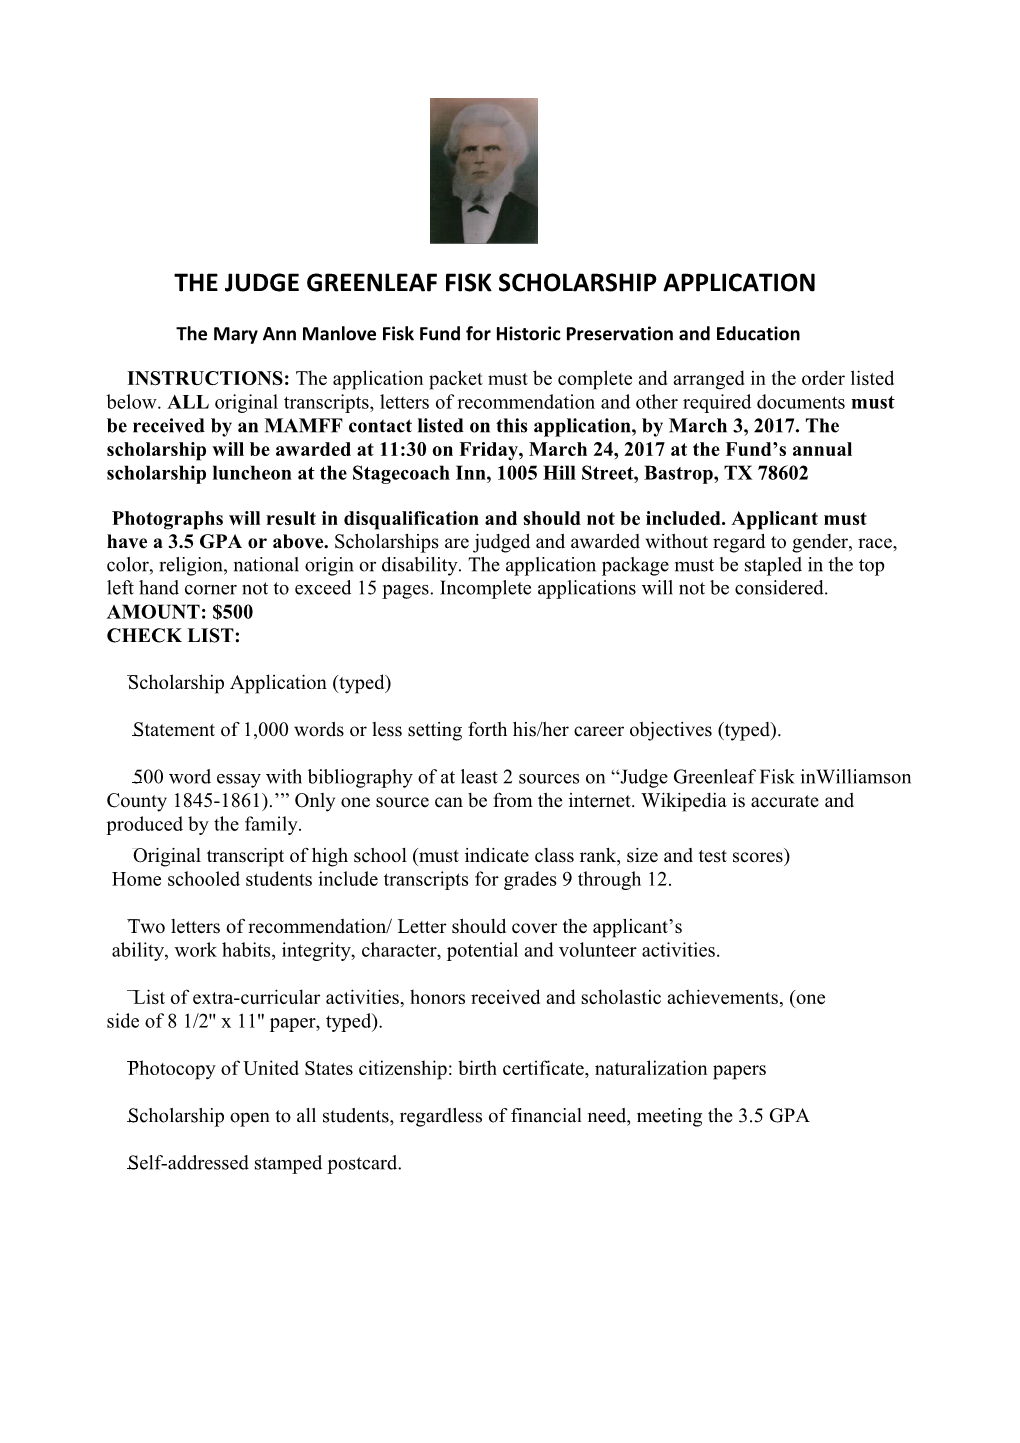 The Judge Greenleaf Fisk Scholarship Application